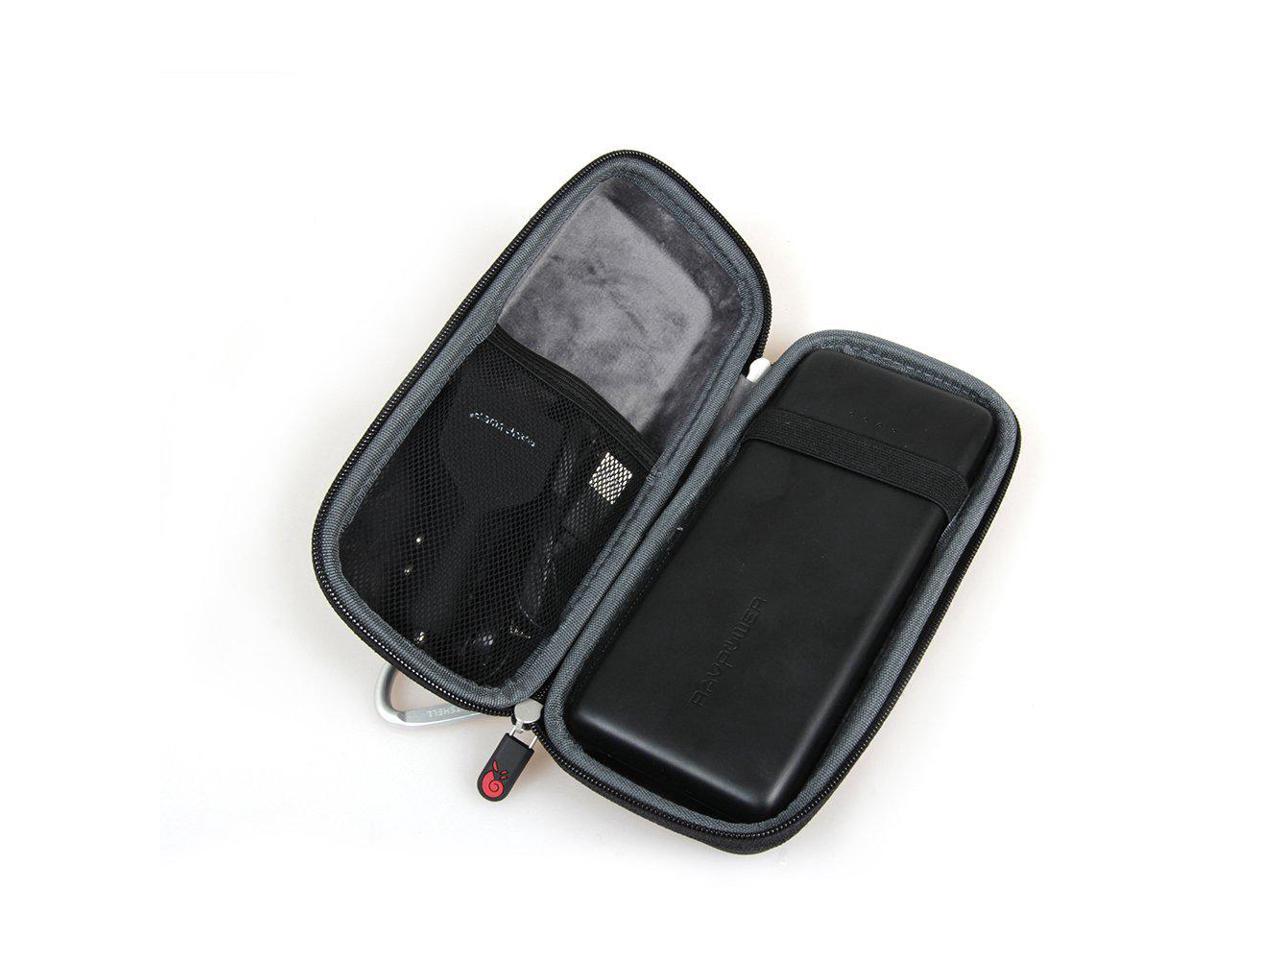 Black Hermitshell Hard EVA Travel Case for RAVPower Mini External SSD Hard Drive Portable SSD USB-C Solid State Flash Drive 